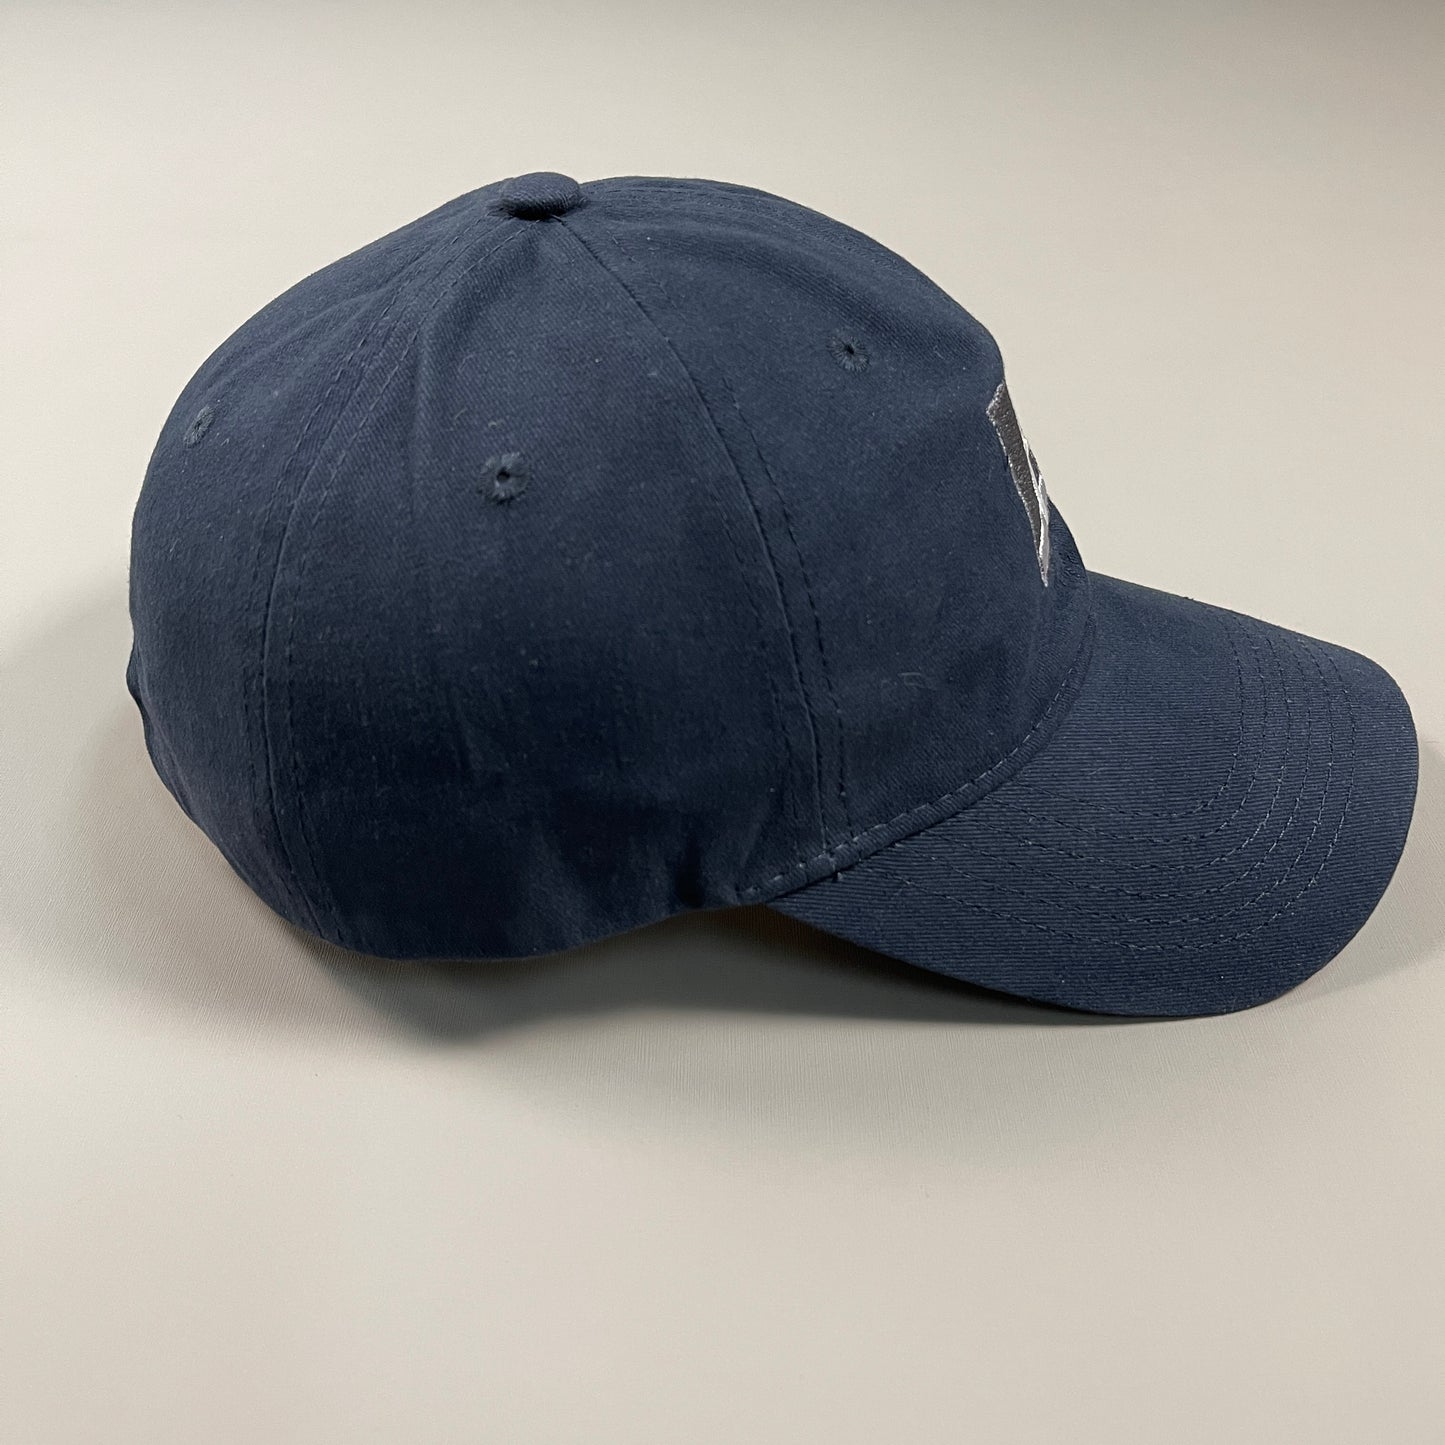 FACEBOOK Embroidered Baseball Cap Adjustable Hat Sz OS Black (New)